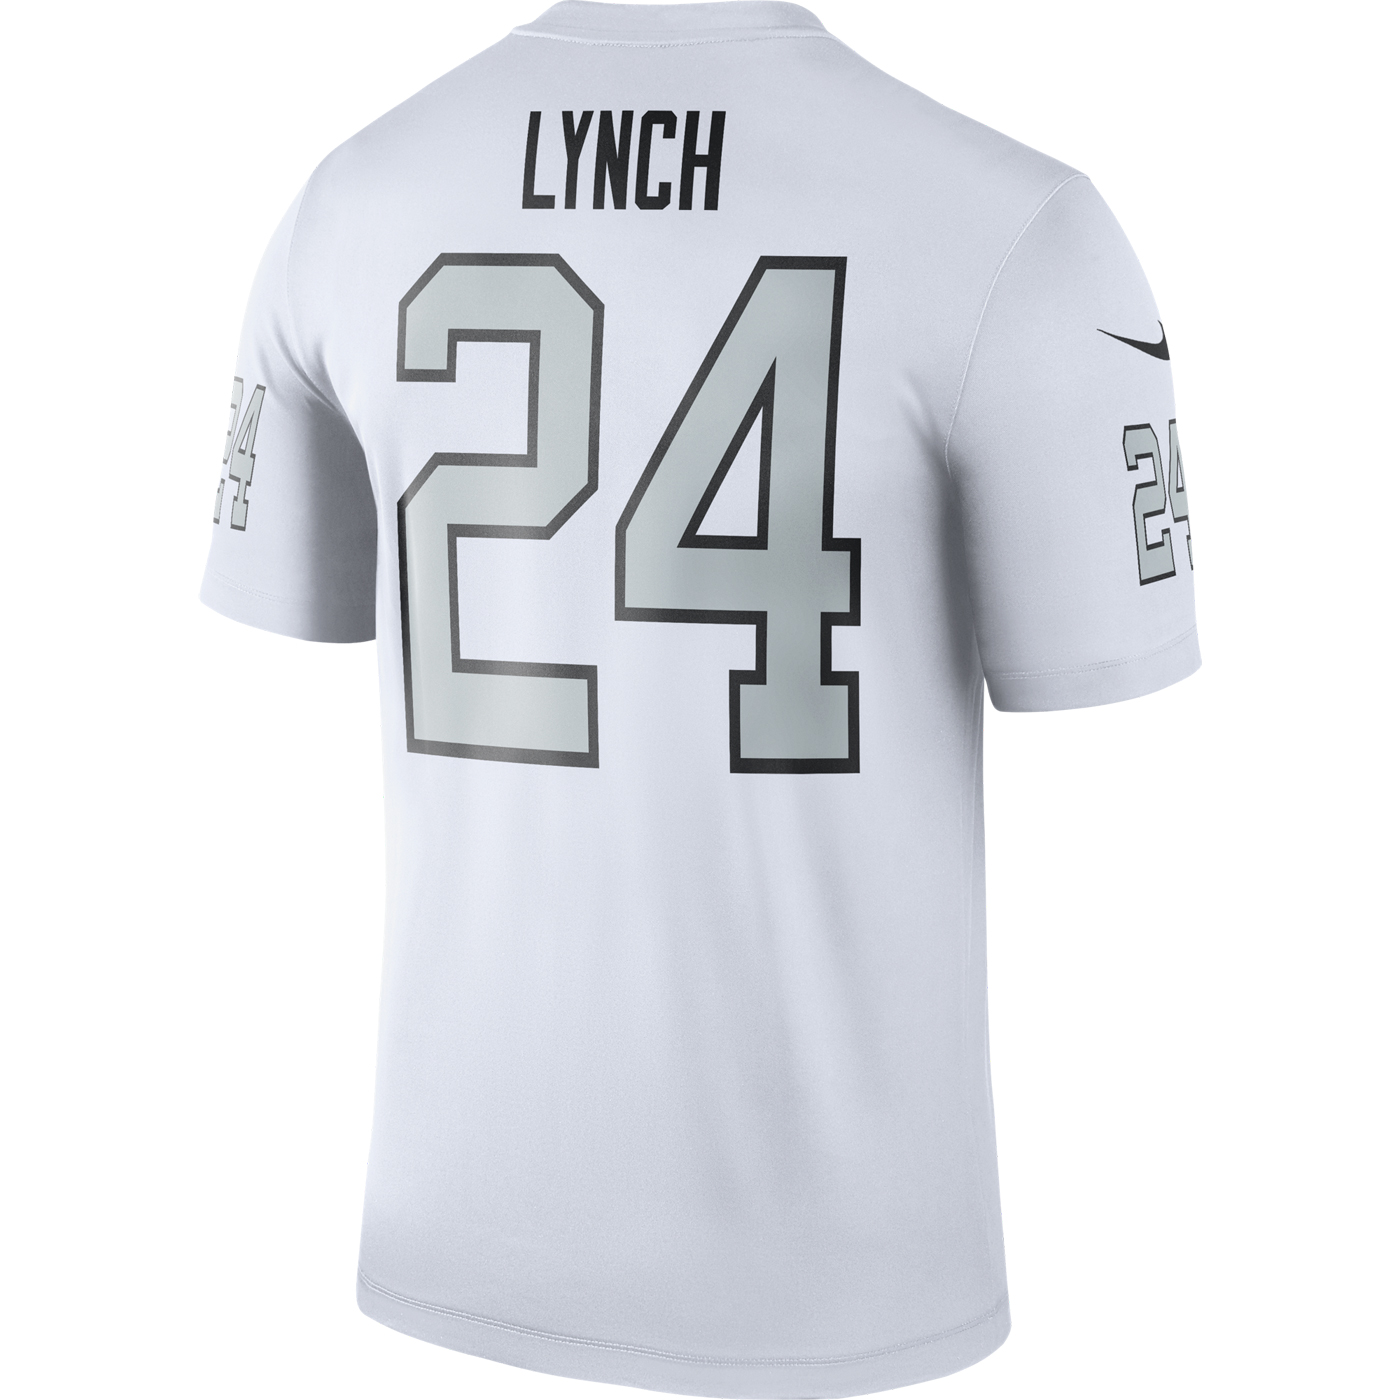 lynch raiders jersey